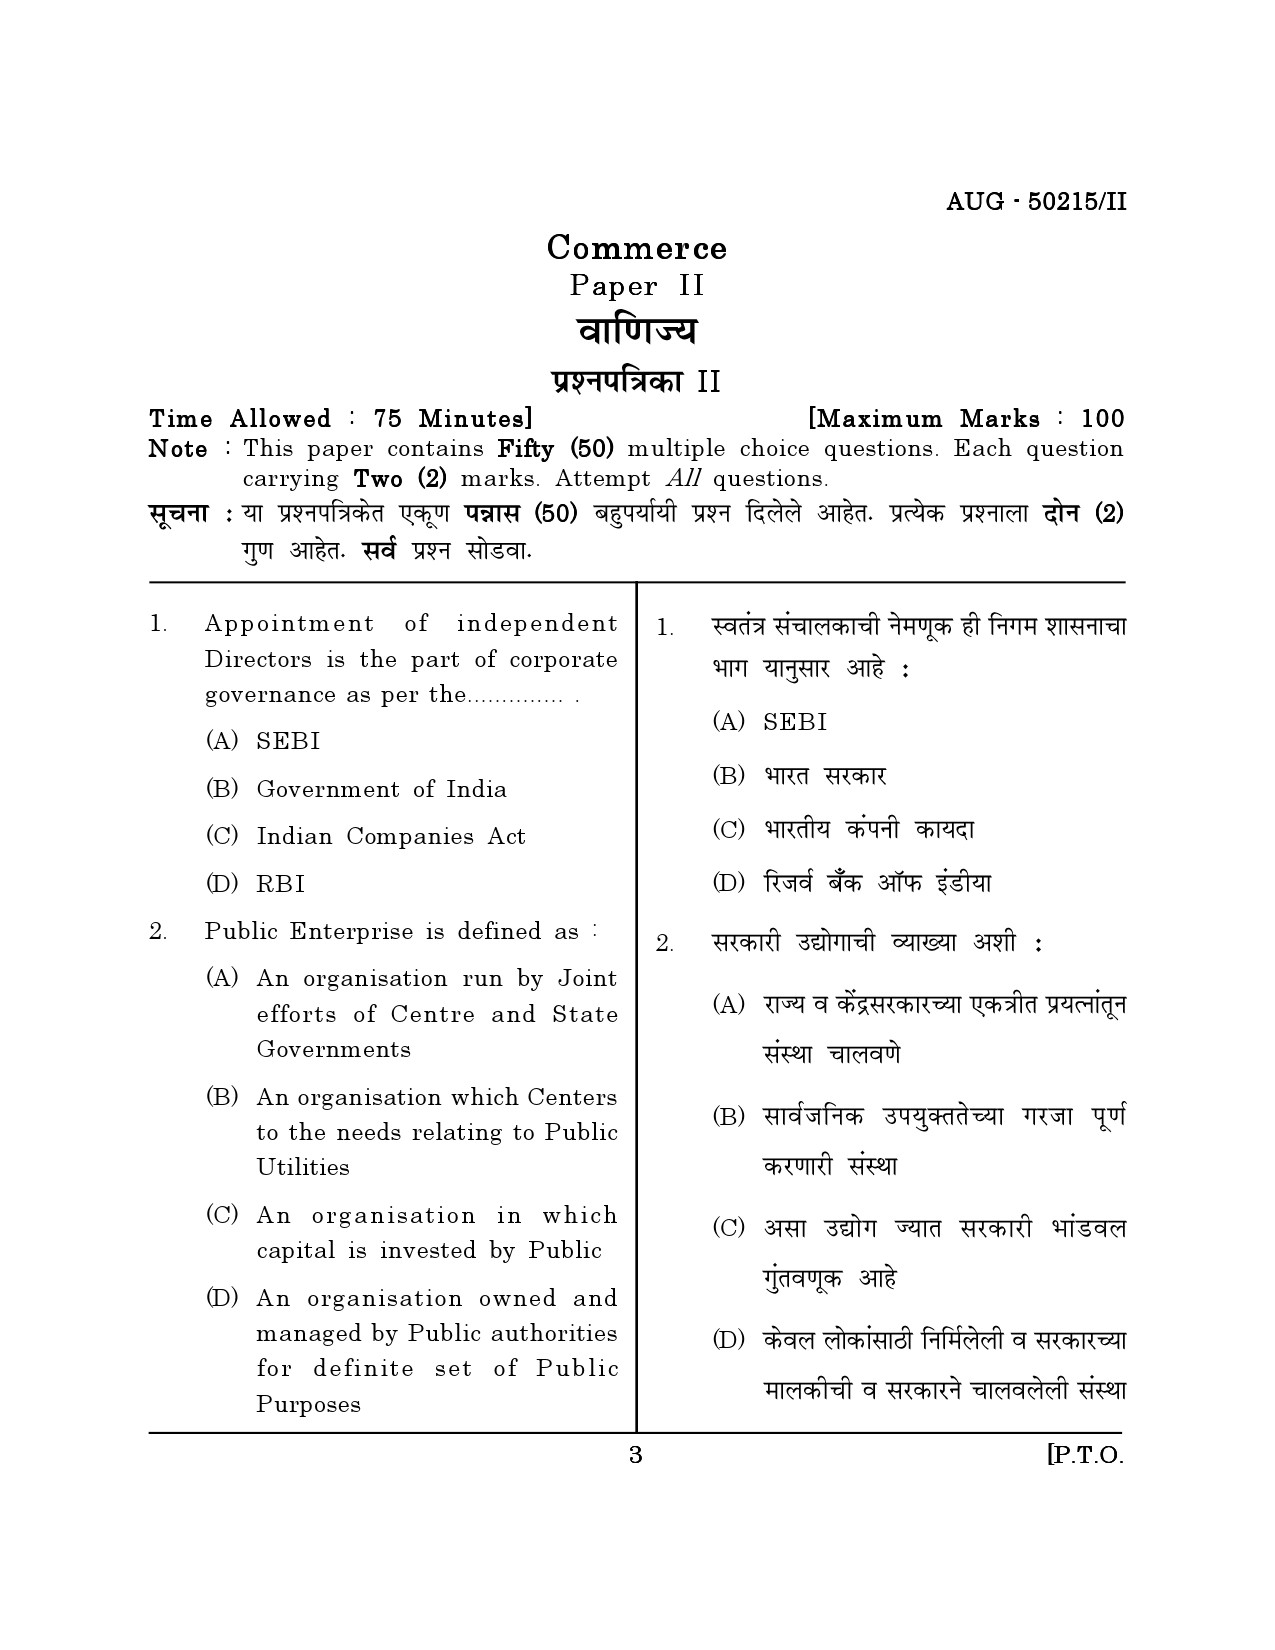 Maharashtra SET Commerce Question Paper II August 2015 2